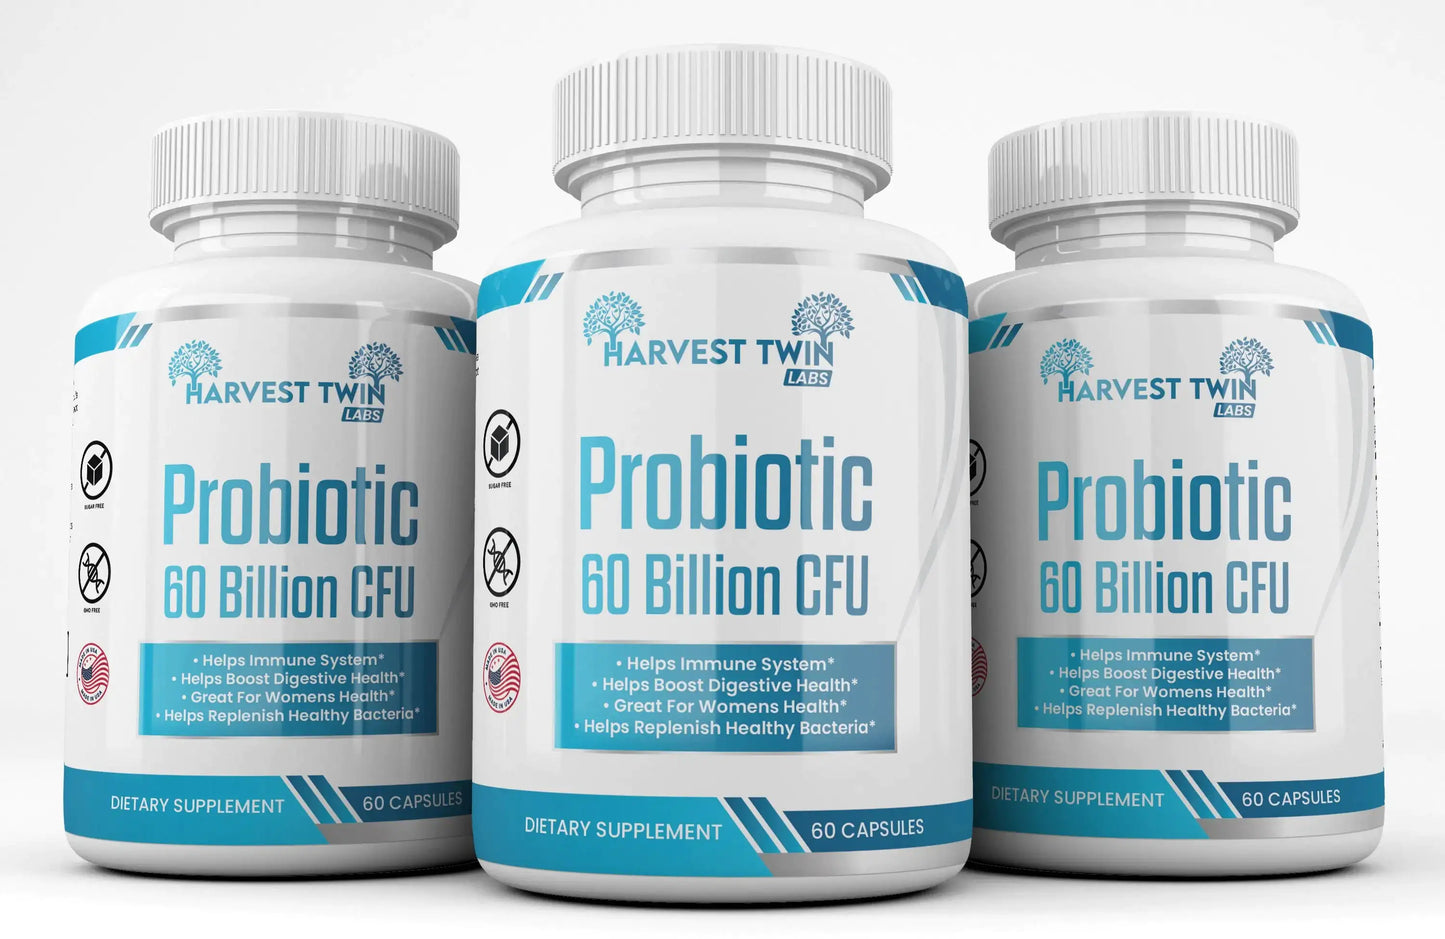 Probiotic 60 Billion CFU